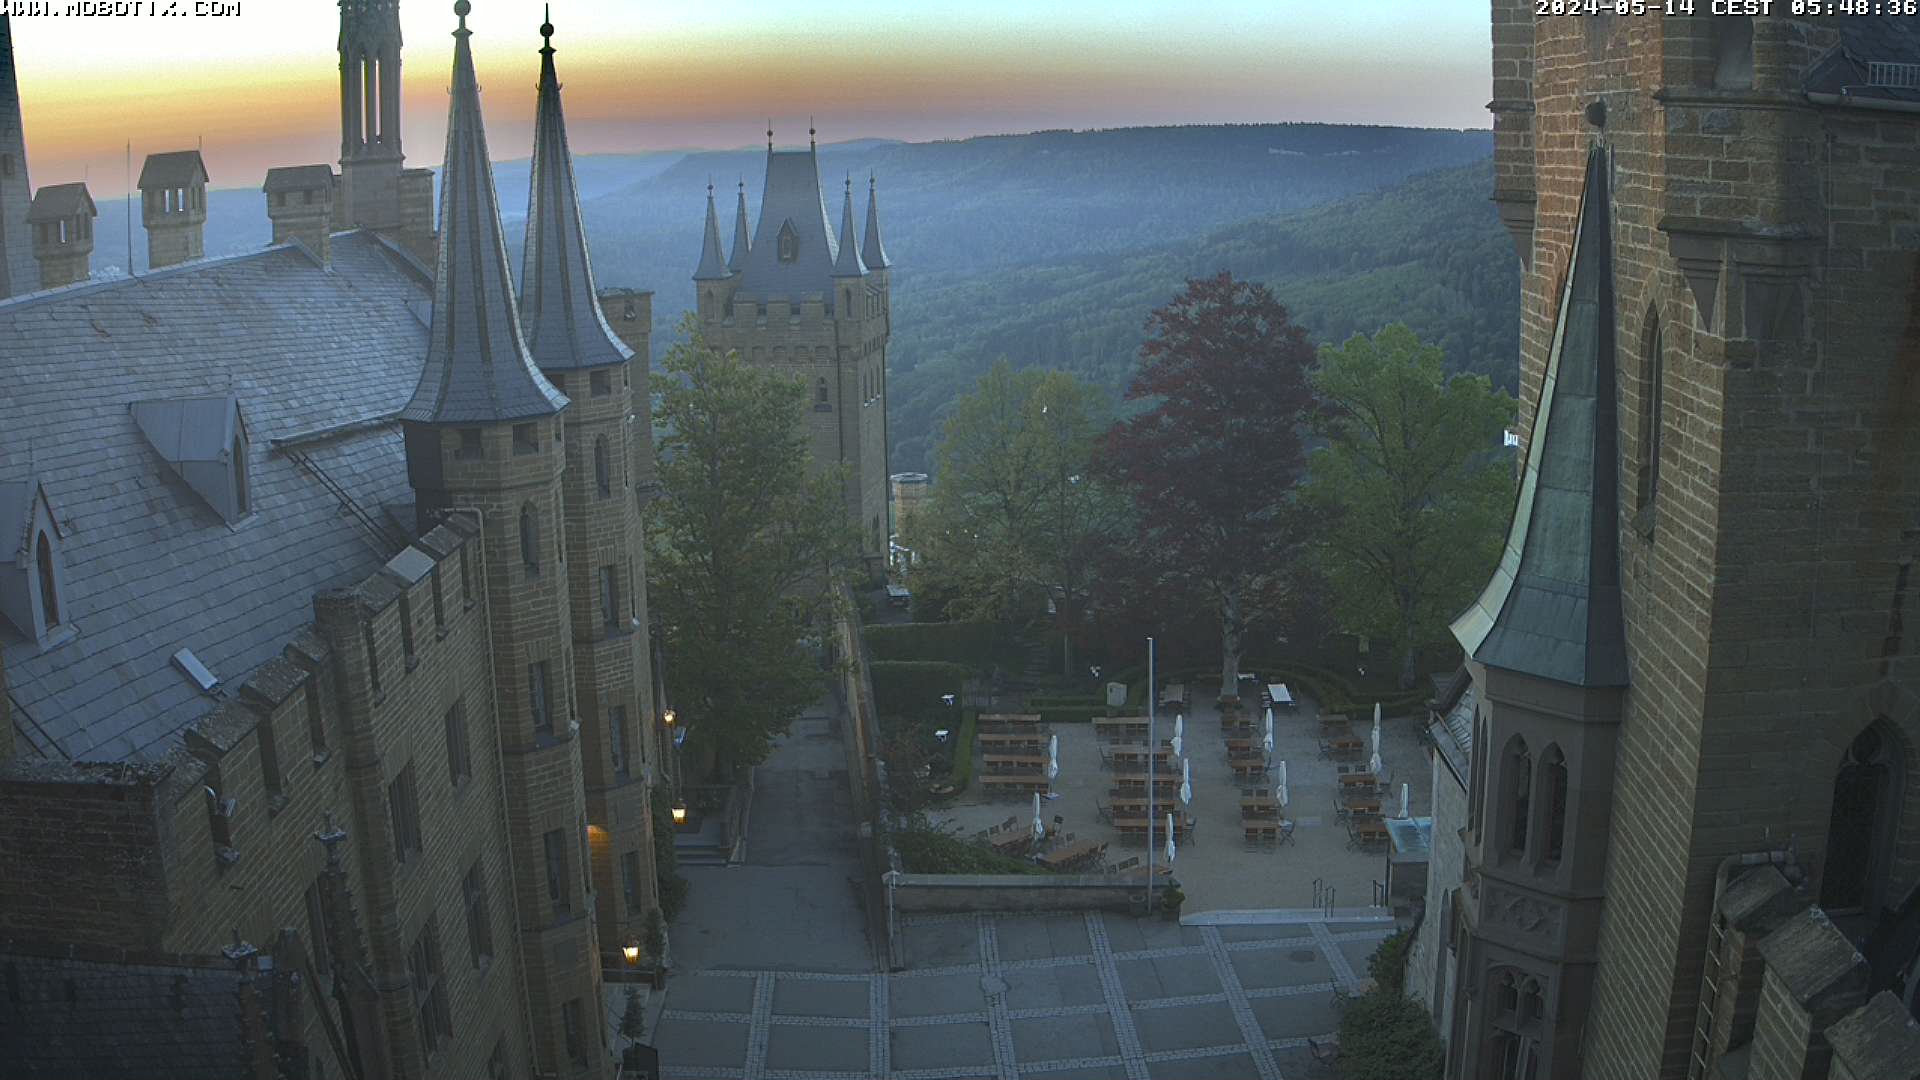 Burg Hohenzollern Thu. 05:50